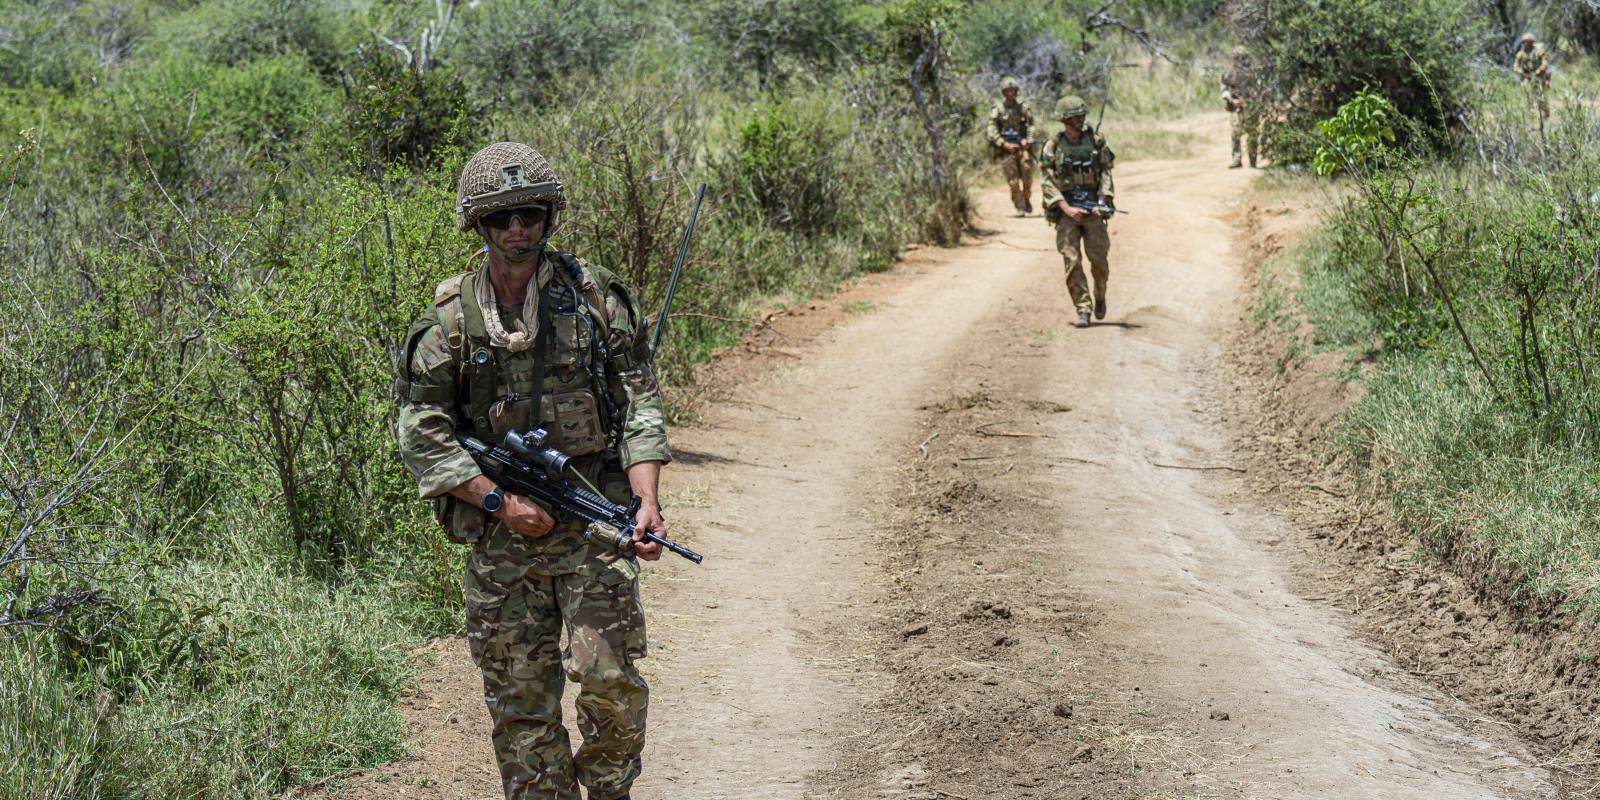 British soldiers taking part in practise exercises in Kenya.